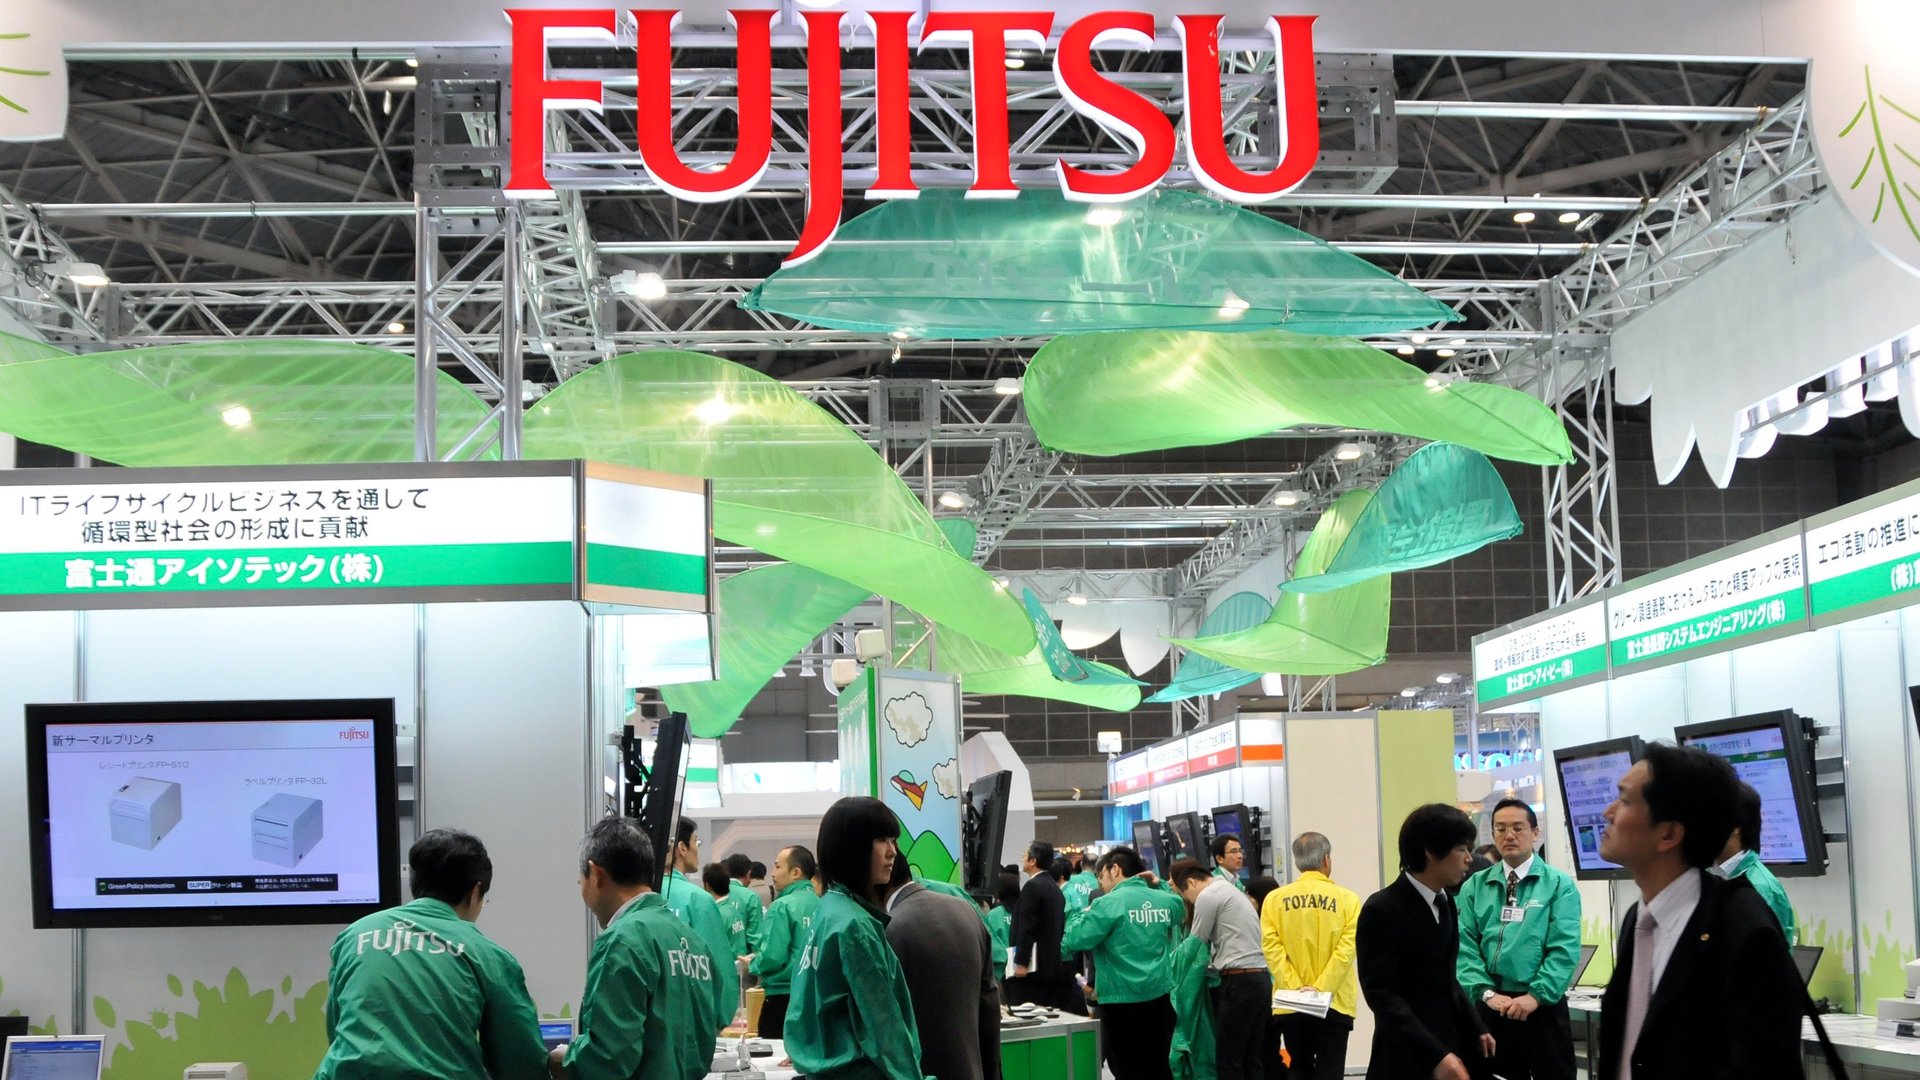 Fujitsu bosses paid £26m during Horizon contract